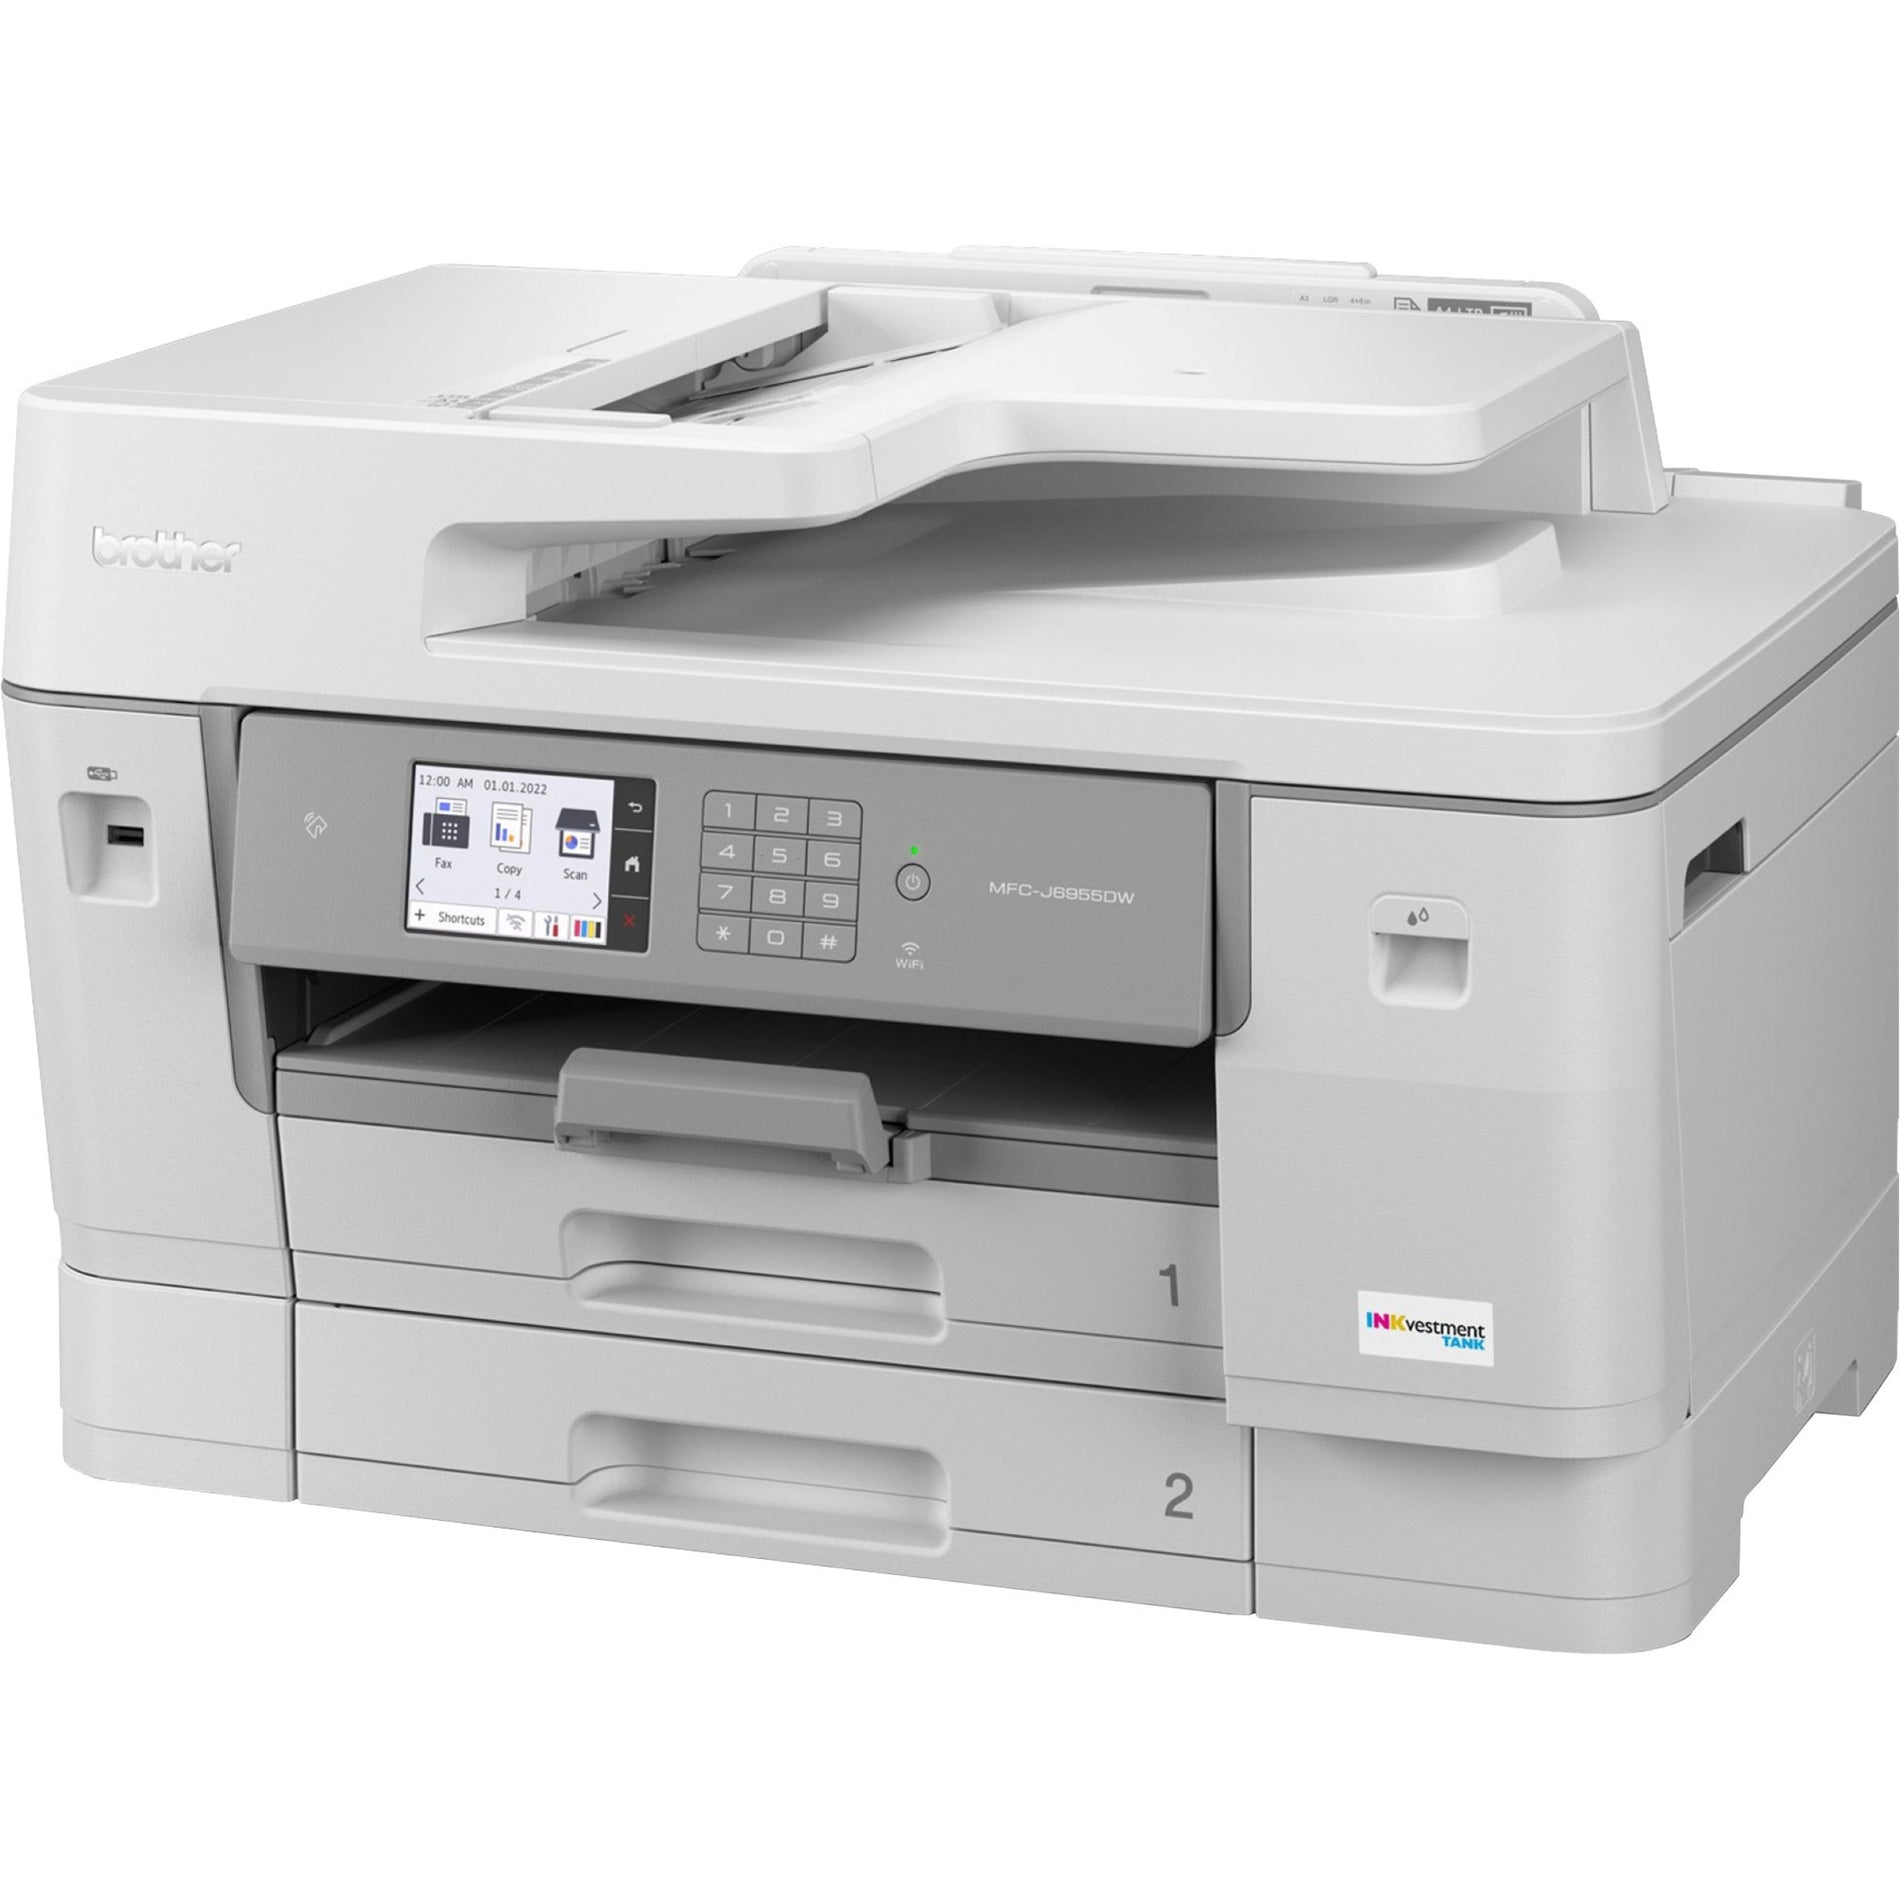 Brother MFC-J6955DW Inkjet Multifunction Printer, Color, Wireless, 2 Year Warranty